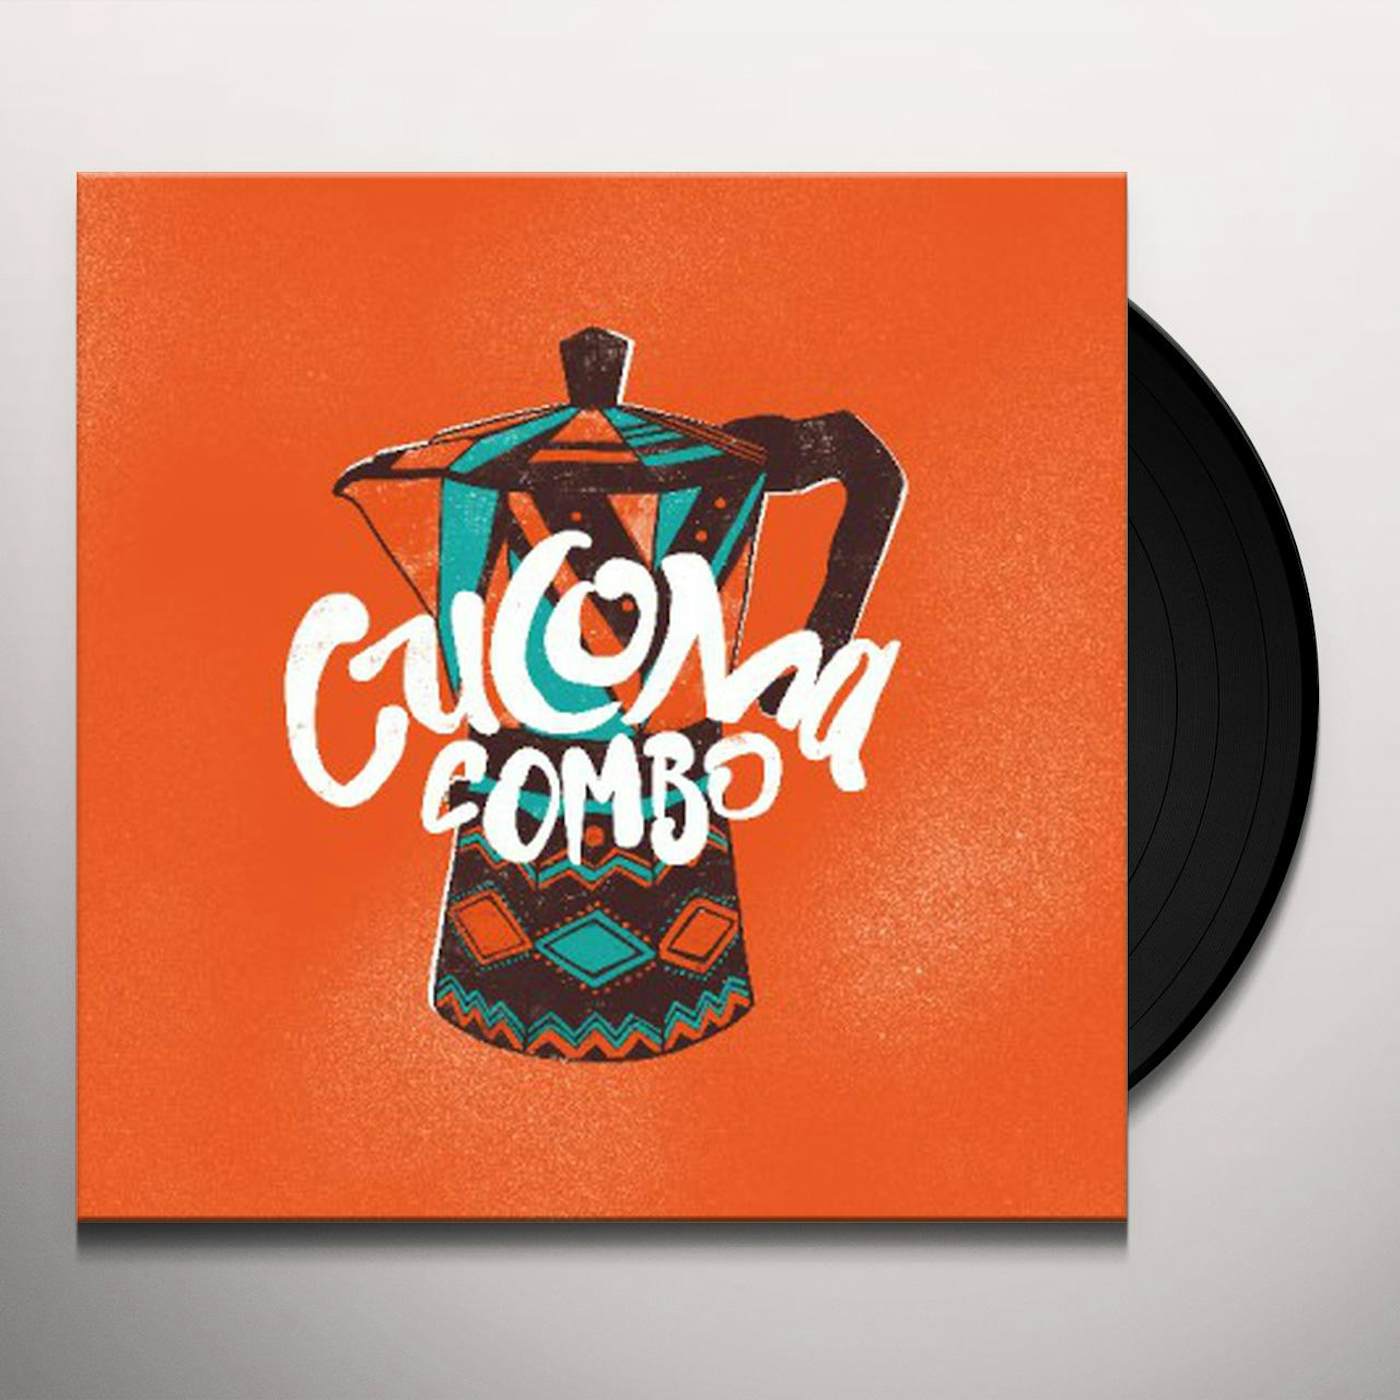 Cucoma Combo Vinyl Record